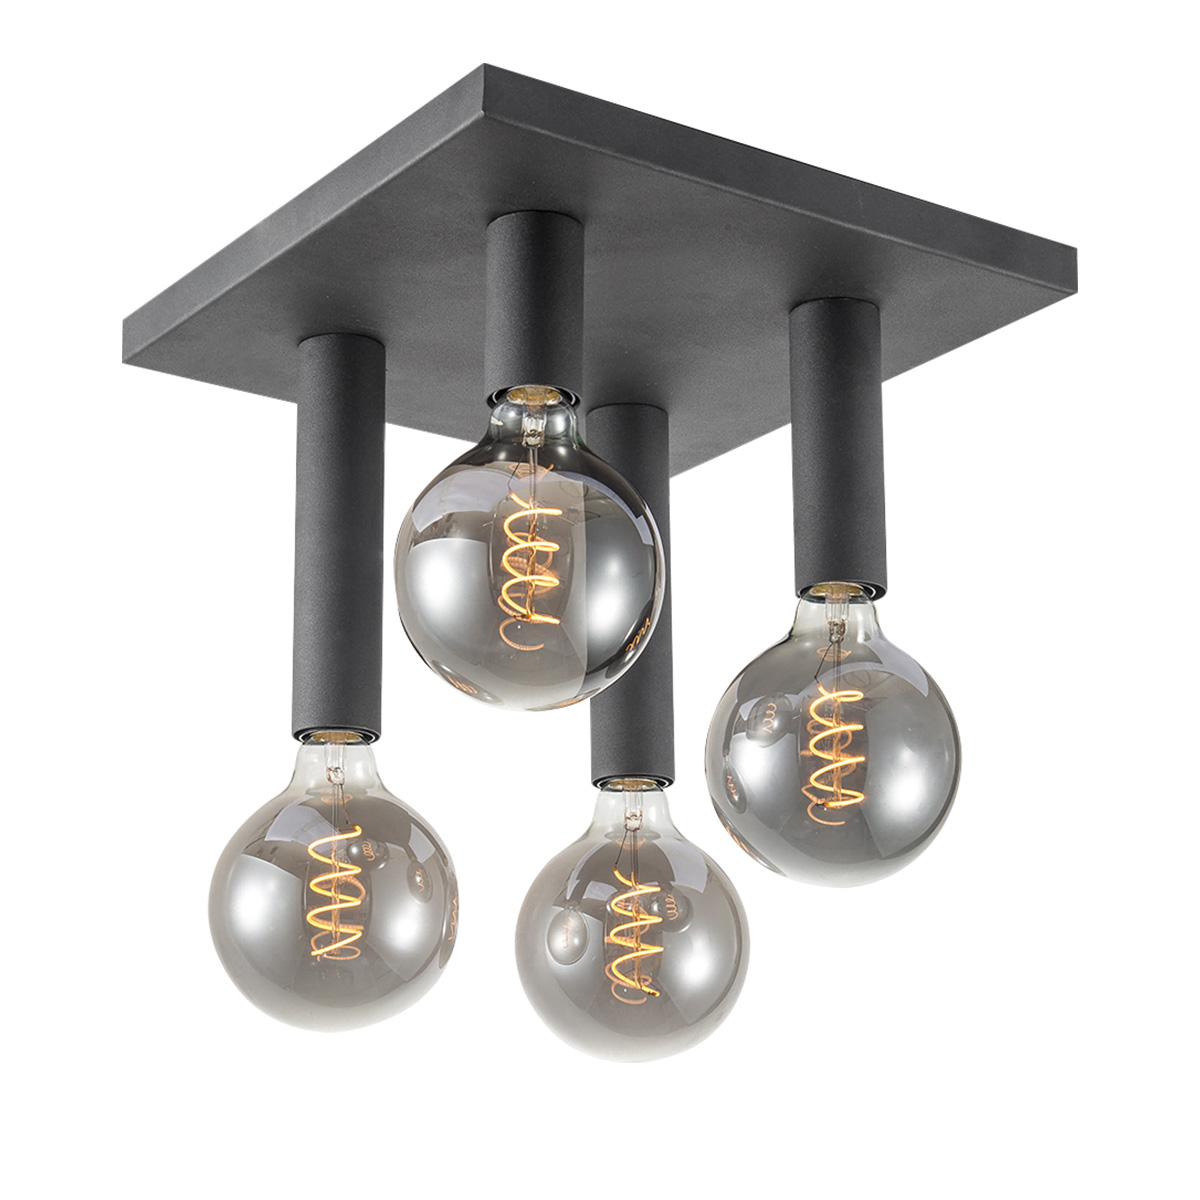 Tangla lighting - TLC5002-04SB - LED ceiling lamp 4 Lights - metal in sand black - drop - square - E27